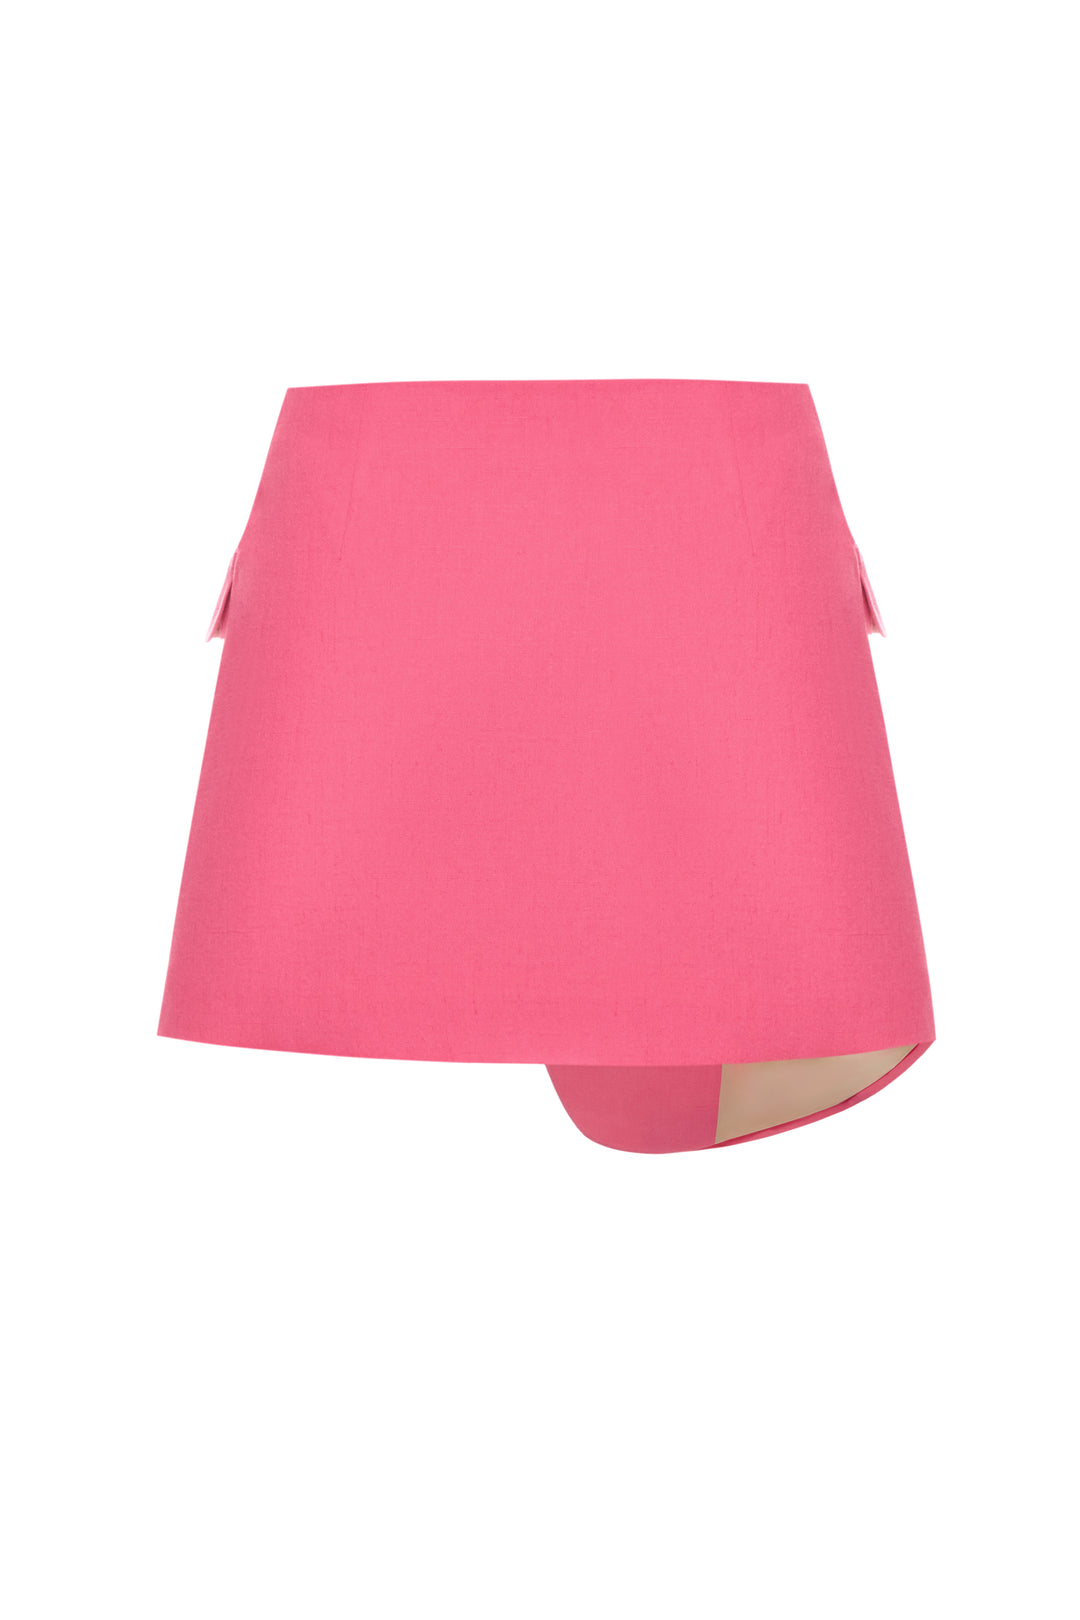 Fuchsia bomb skirt